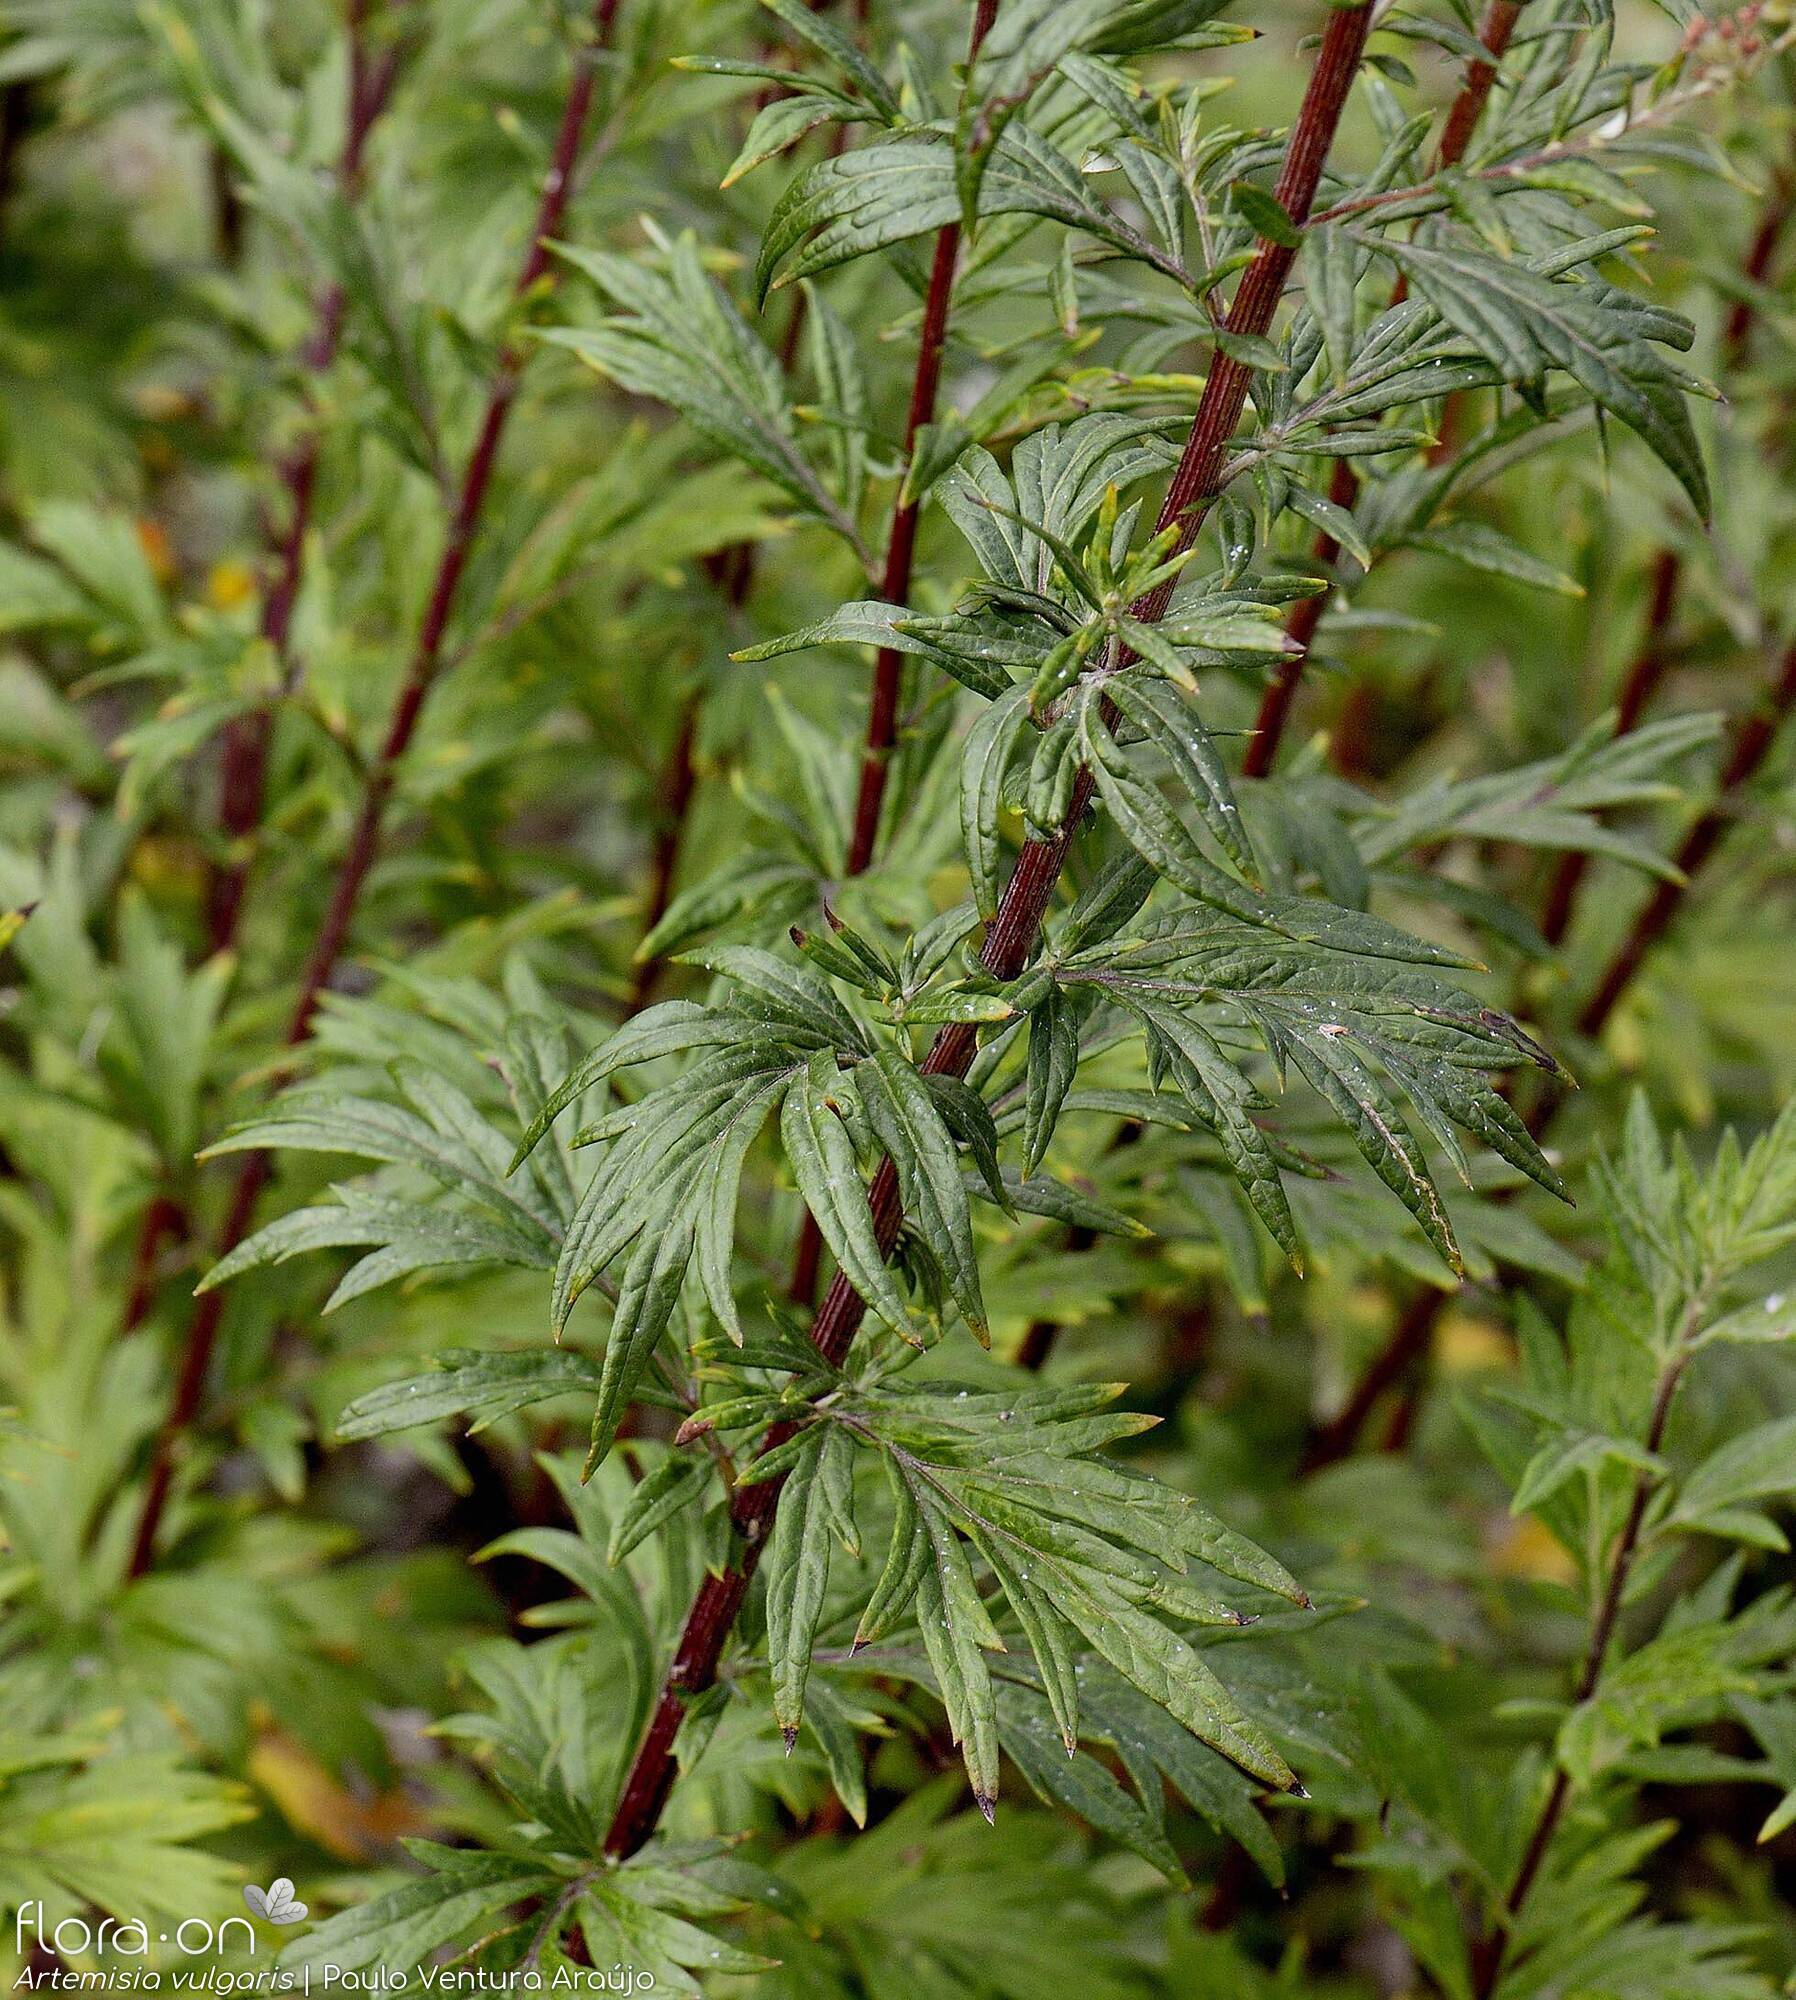 Artemisia vulgaris - Folha (geral) | Paulo Ventura Araújo; CC BY-NC 4.0